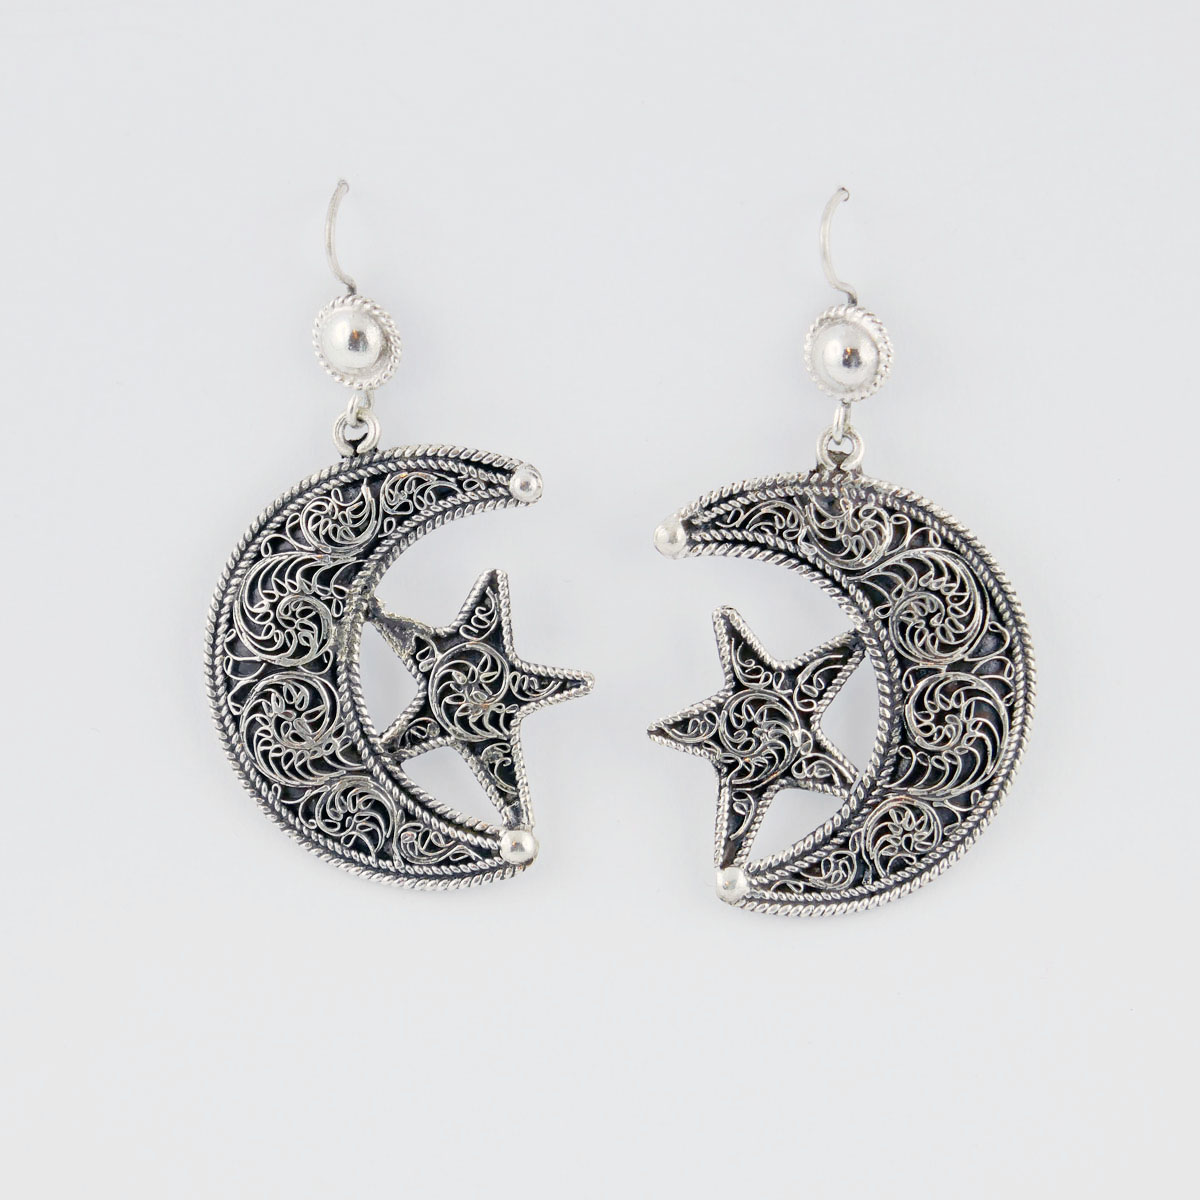 Earrings moon star with fine filigree work, silver